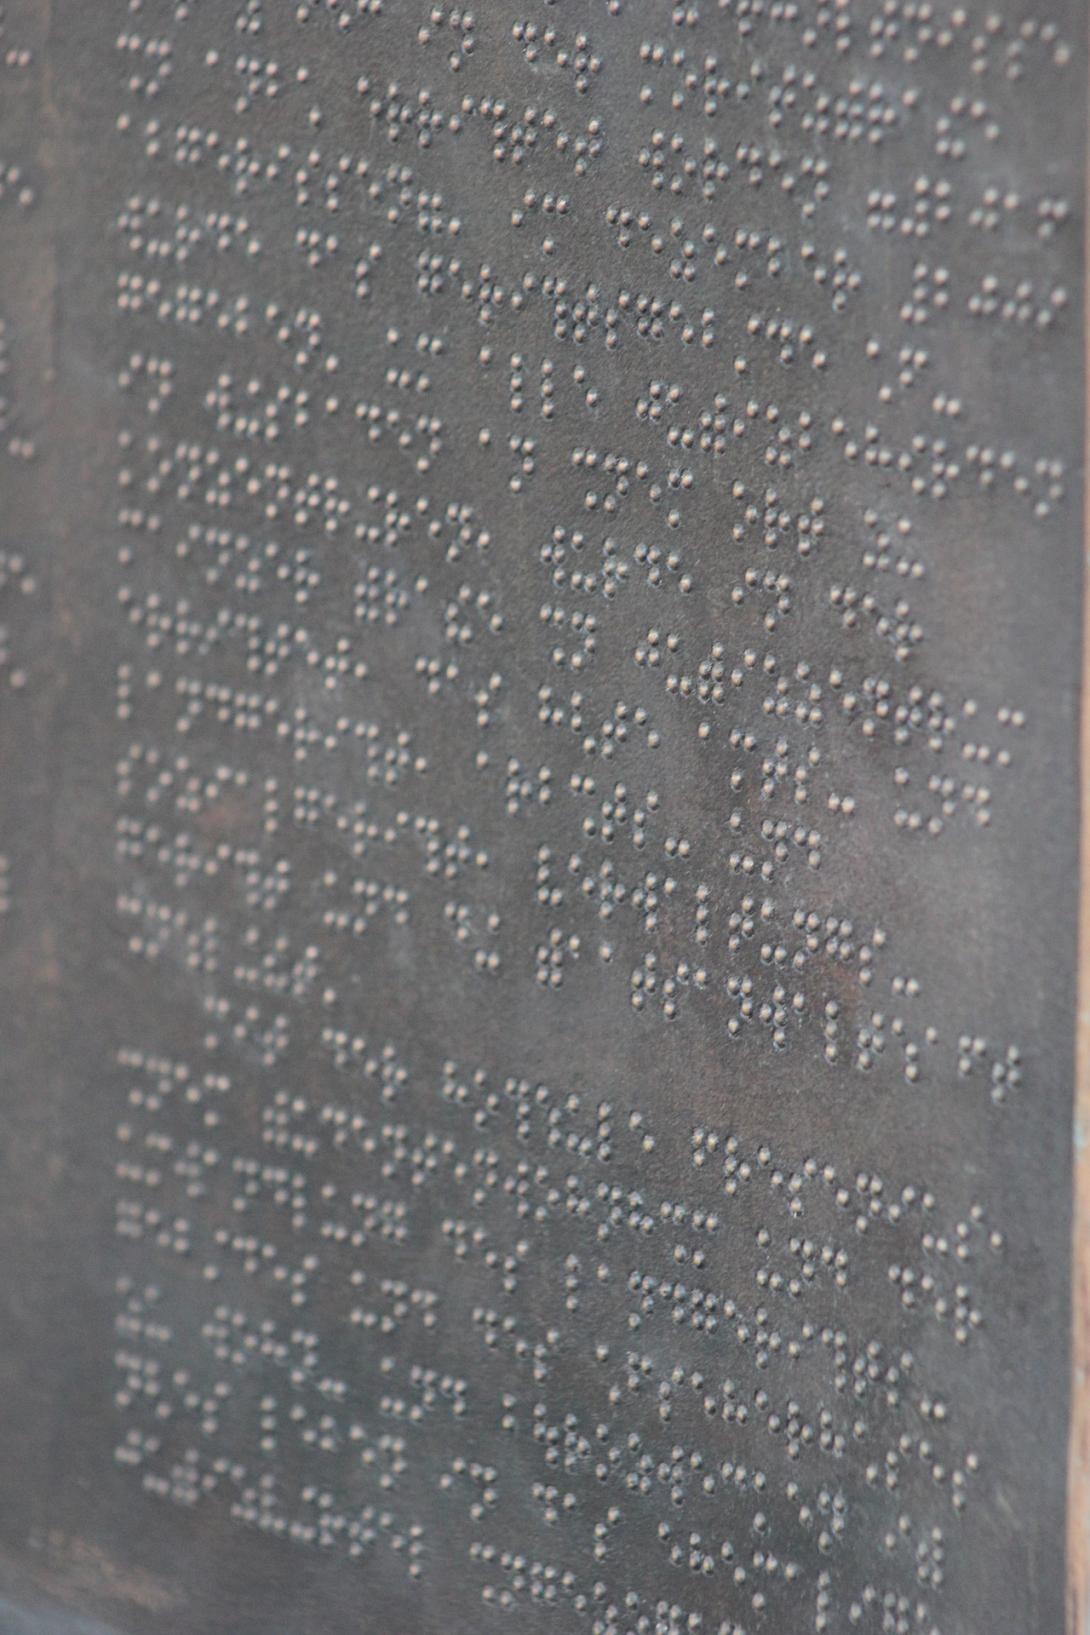 braille-g574e287f5_1920.jpg